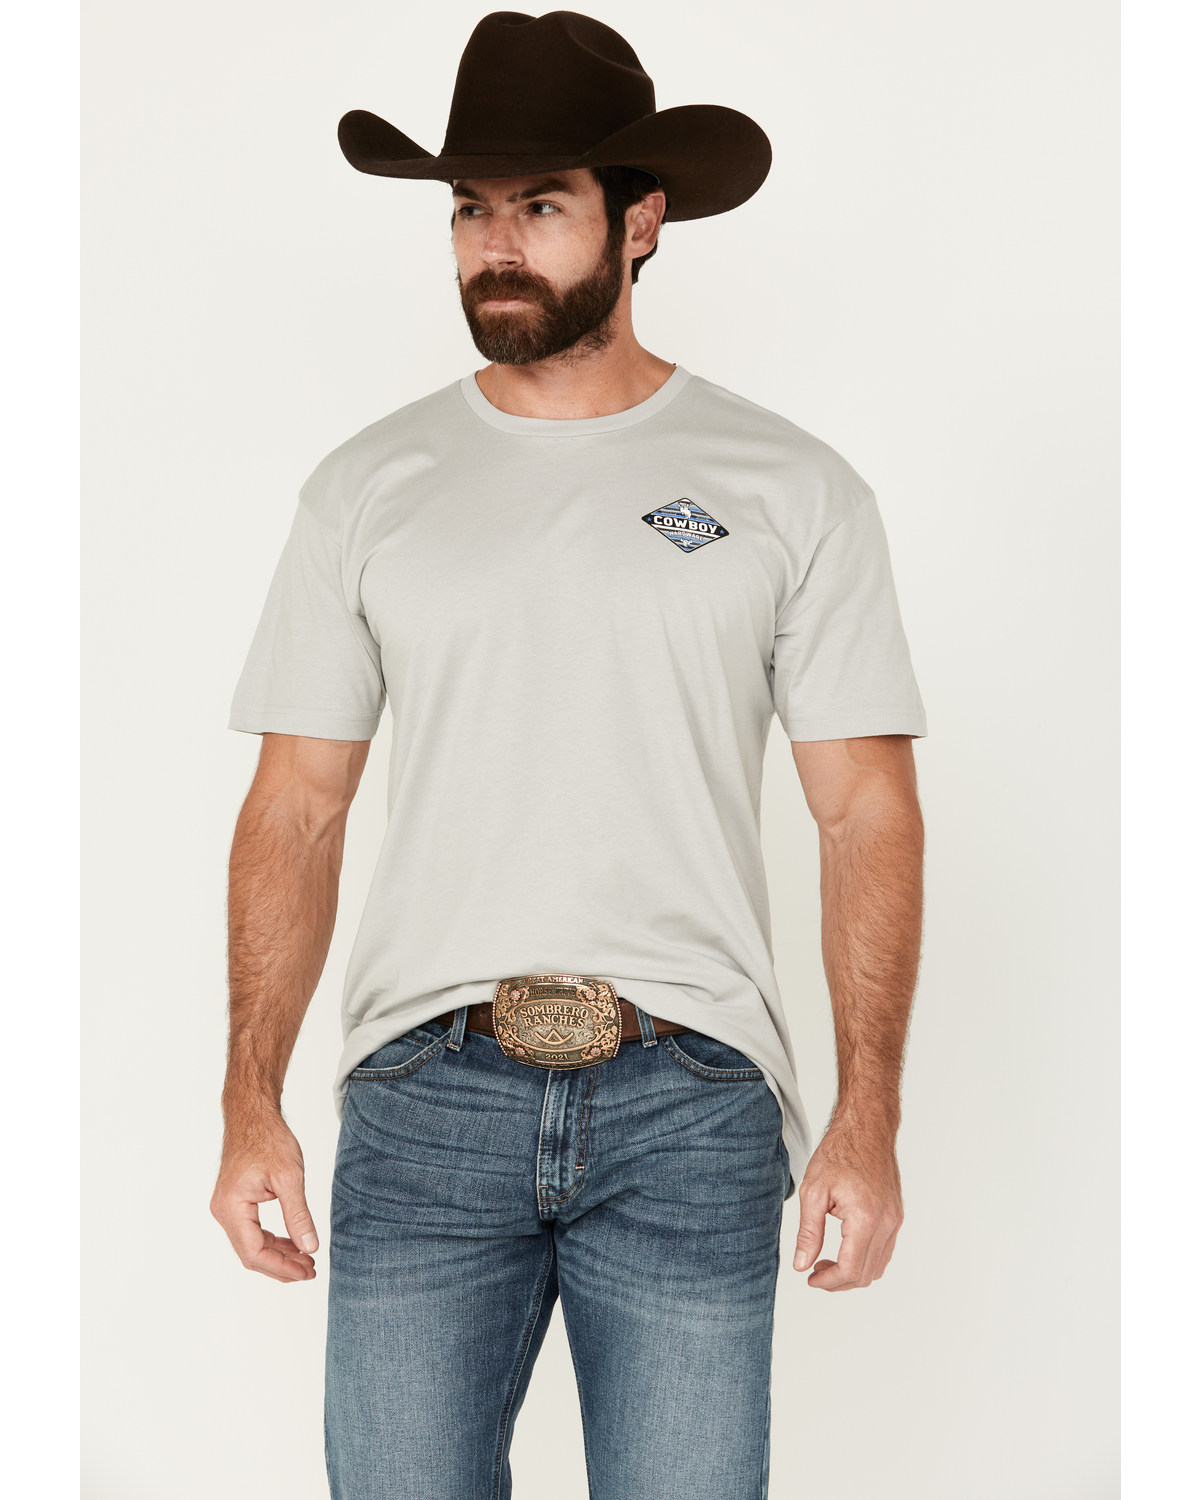 Cowboy Hardware Men's Built Tough Shield Short Sleeve T-Shirt